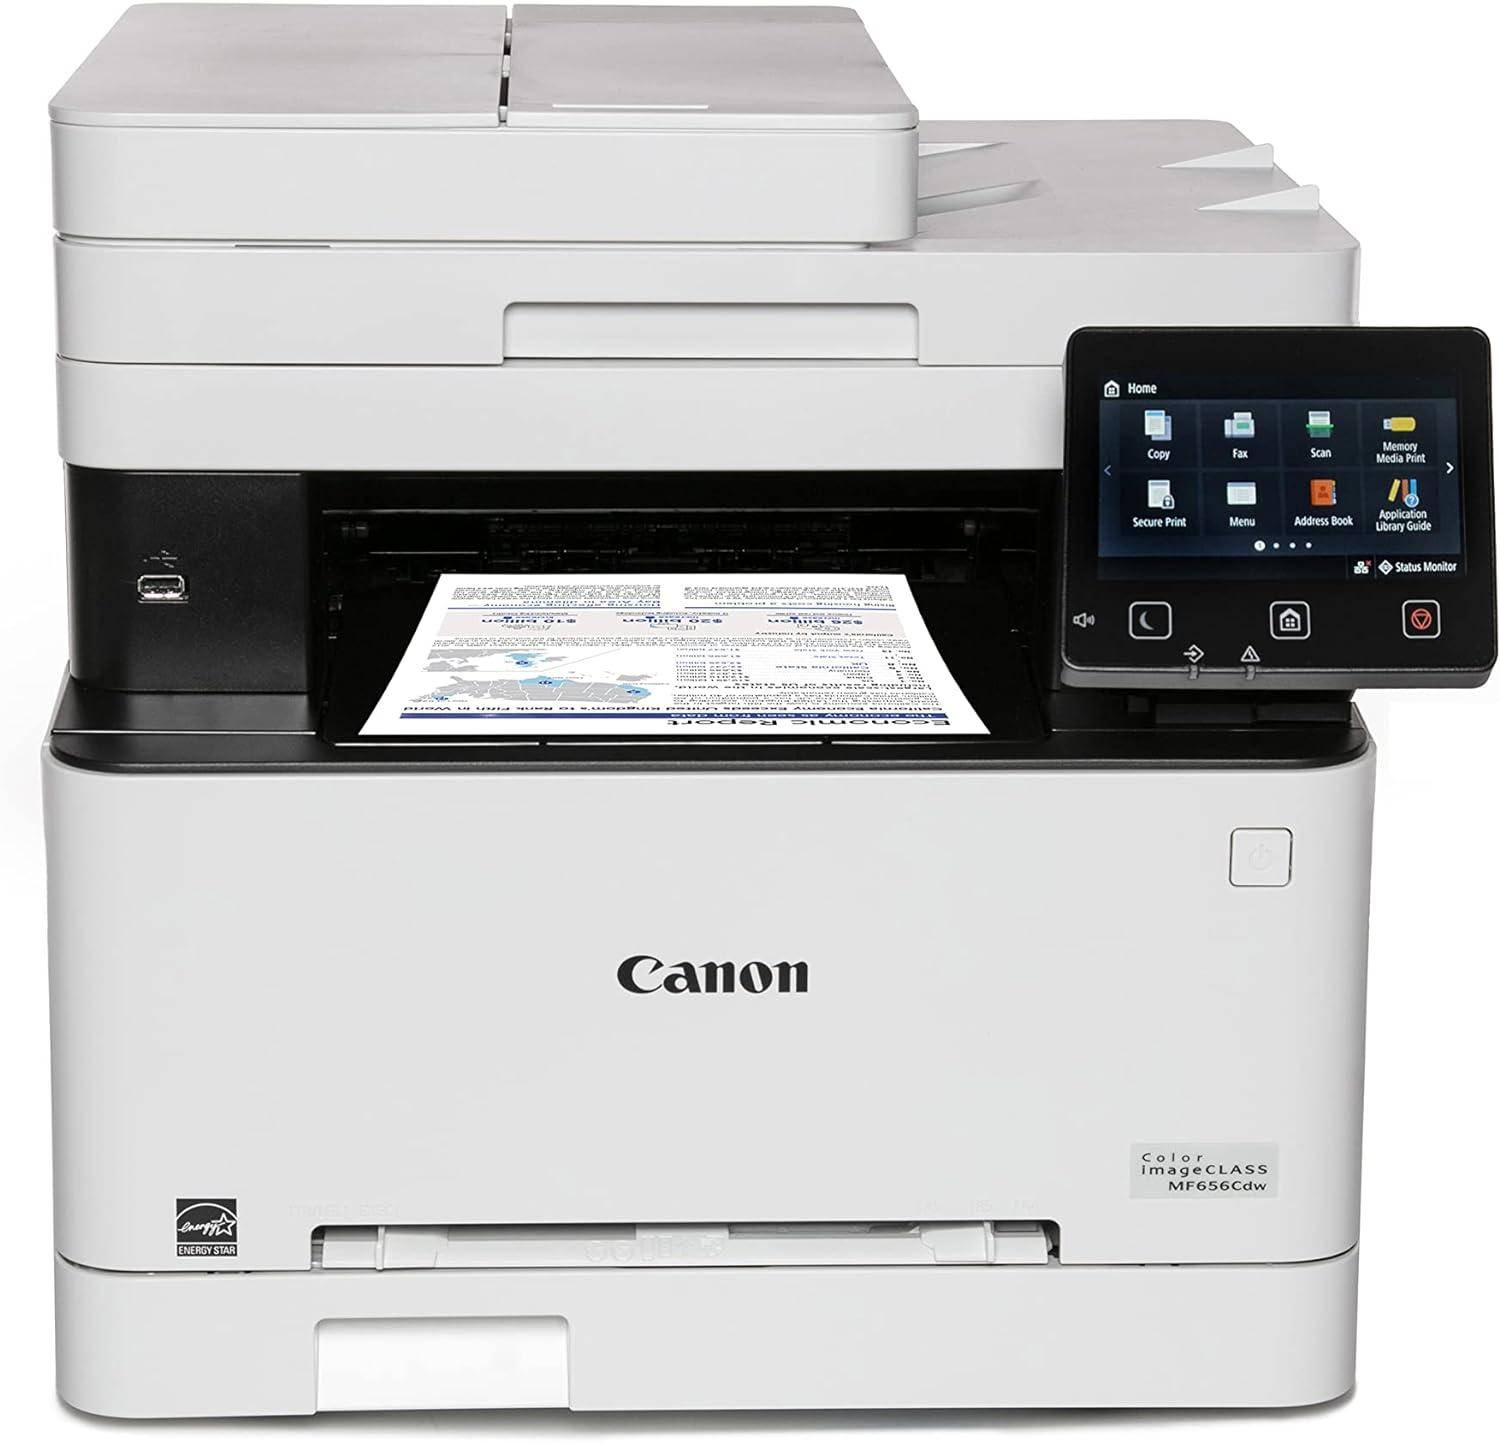 Canon imageClass MF656CDW Wireless Color Laser Printer for $279 Shipped